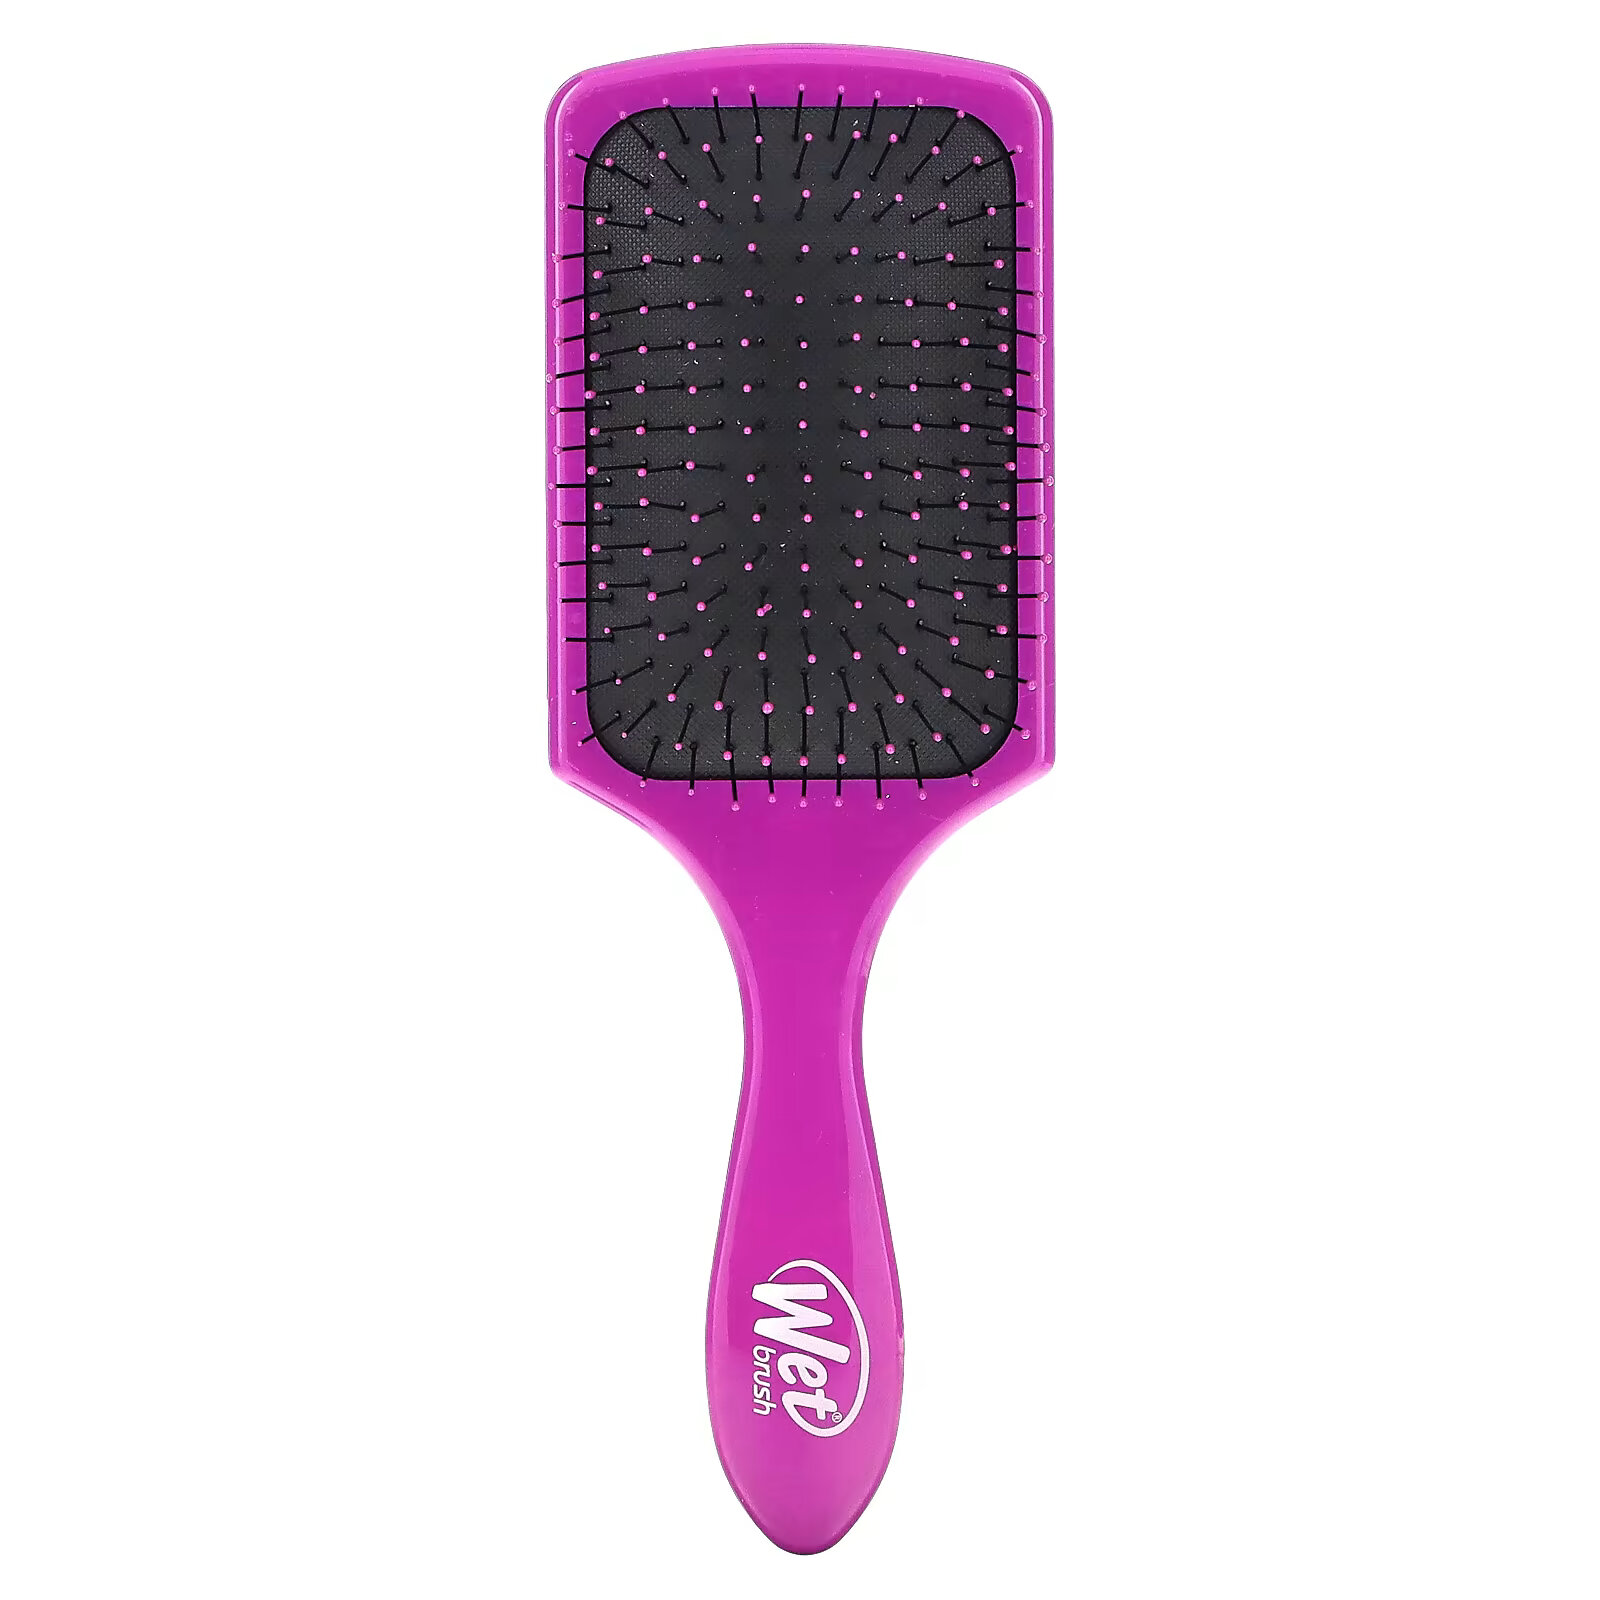 Wet Brush, Paddle Detangler Brush, щетка для легкого расчесывания, пурпурный, 1 шт. wet brush средство для расчесывания волос черный 1 шт